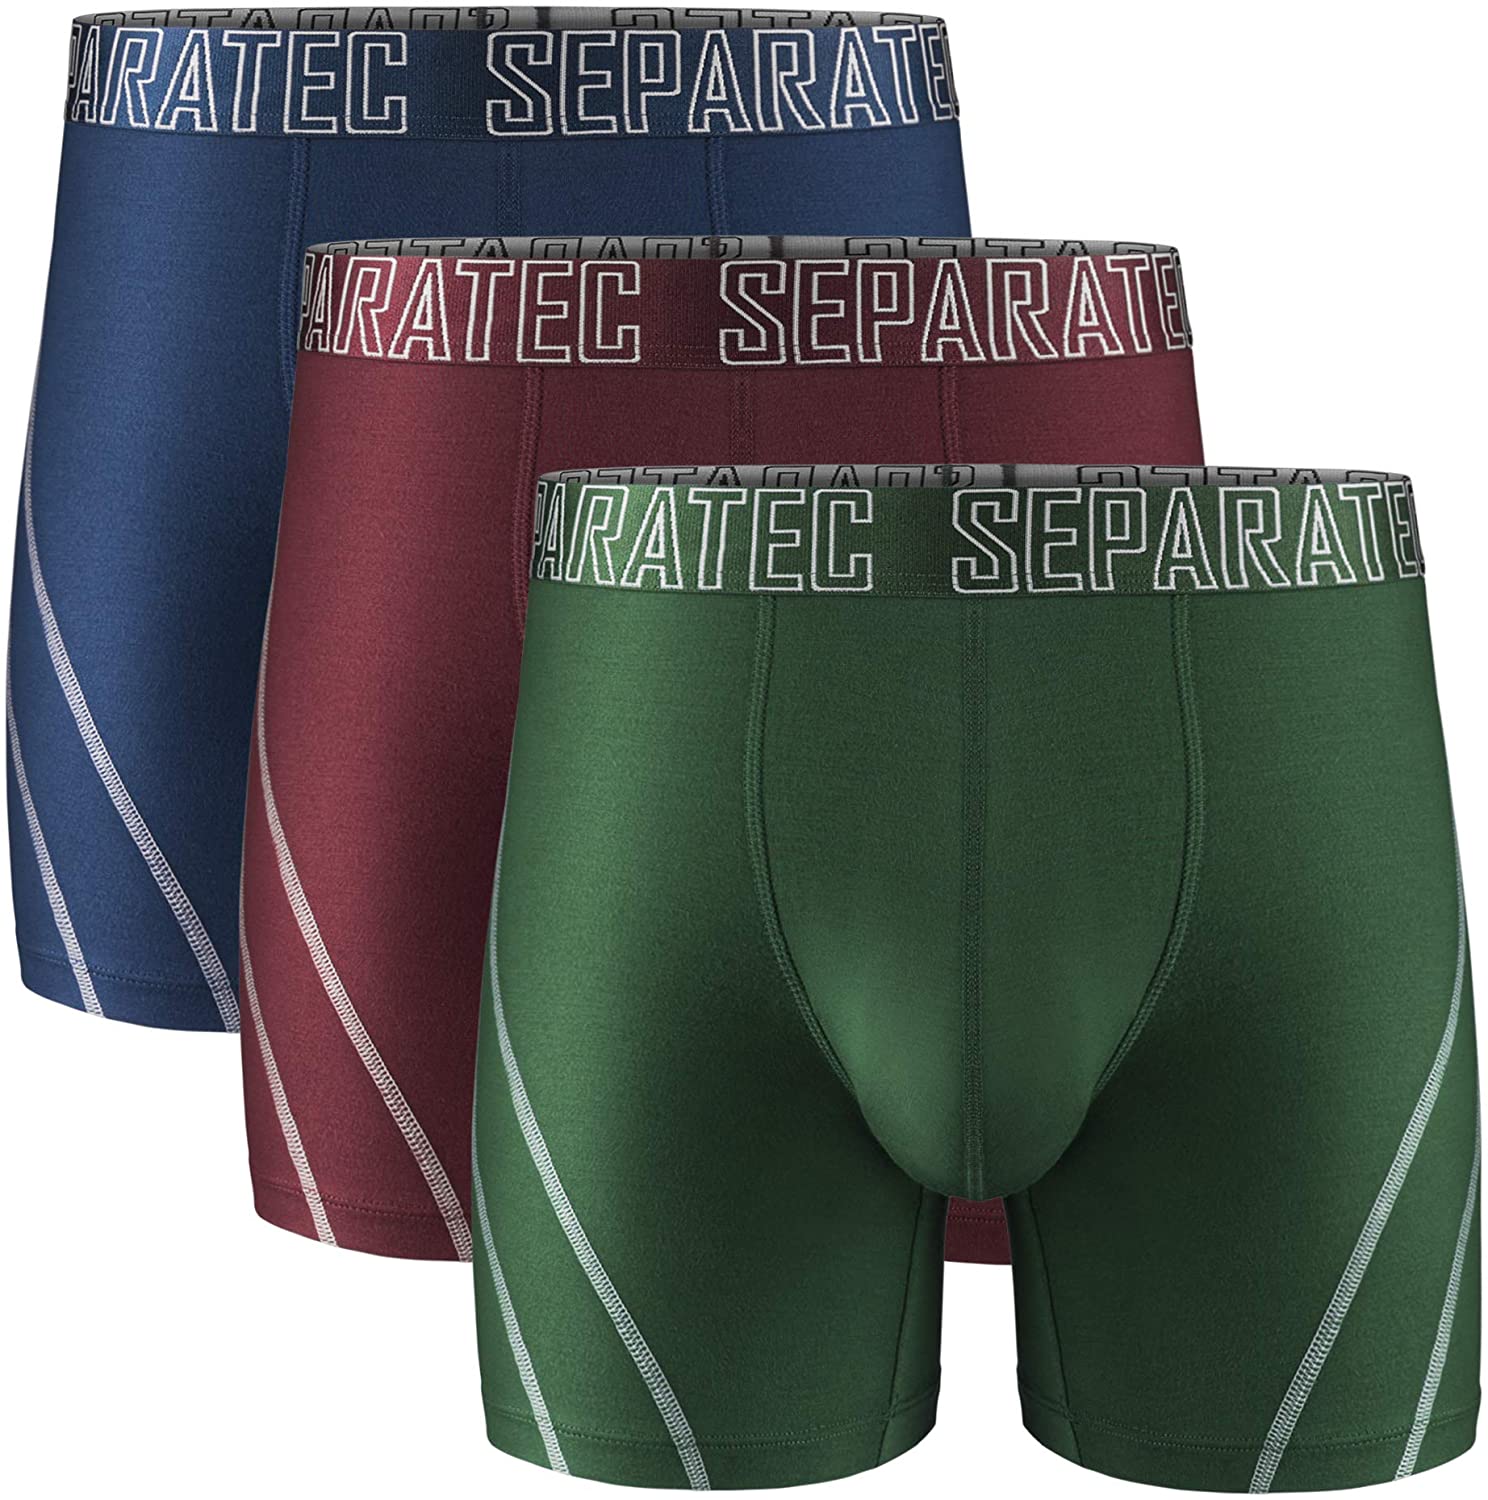 Separatec Men's Boxer Briefs 2.0 Bamboo Rayon Underwear Breathable